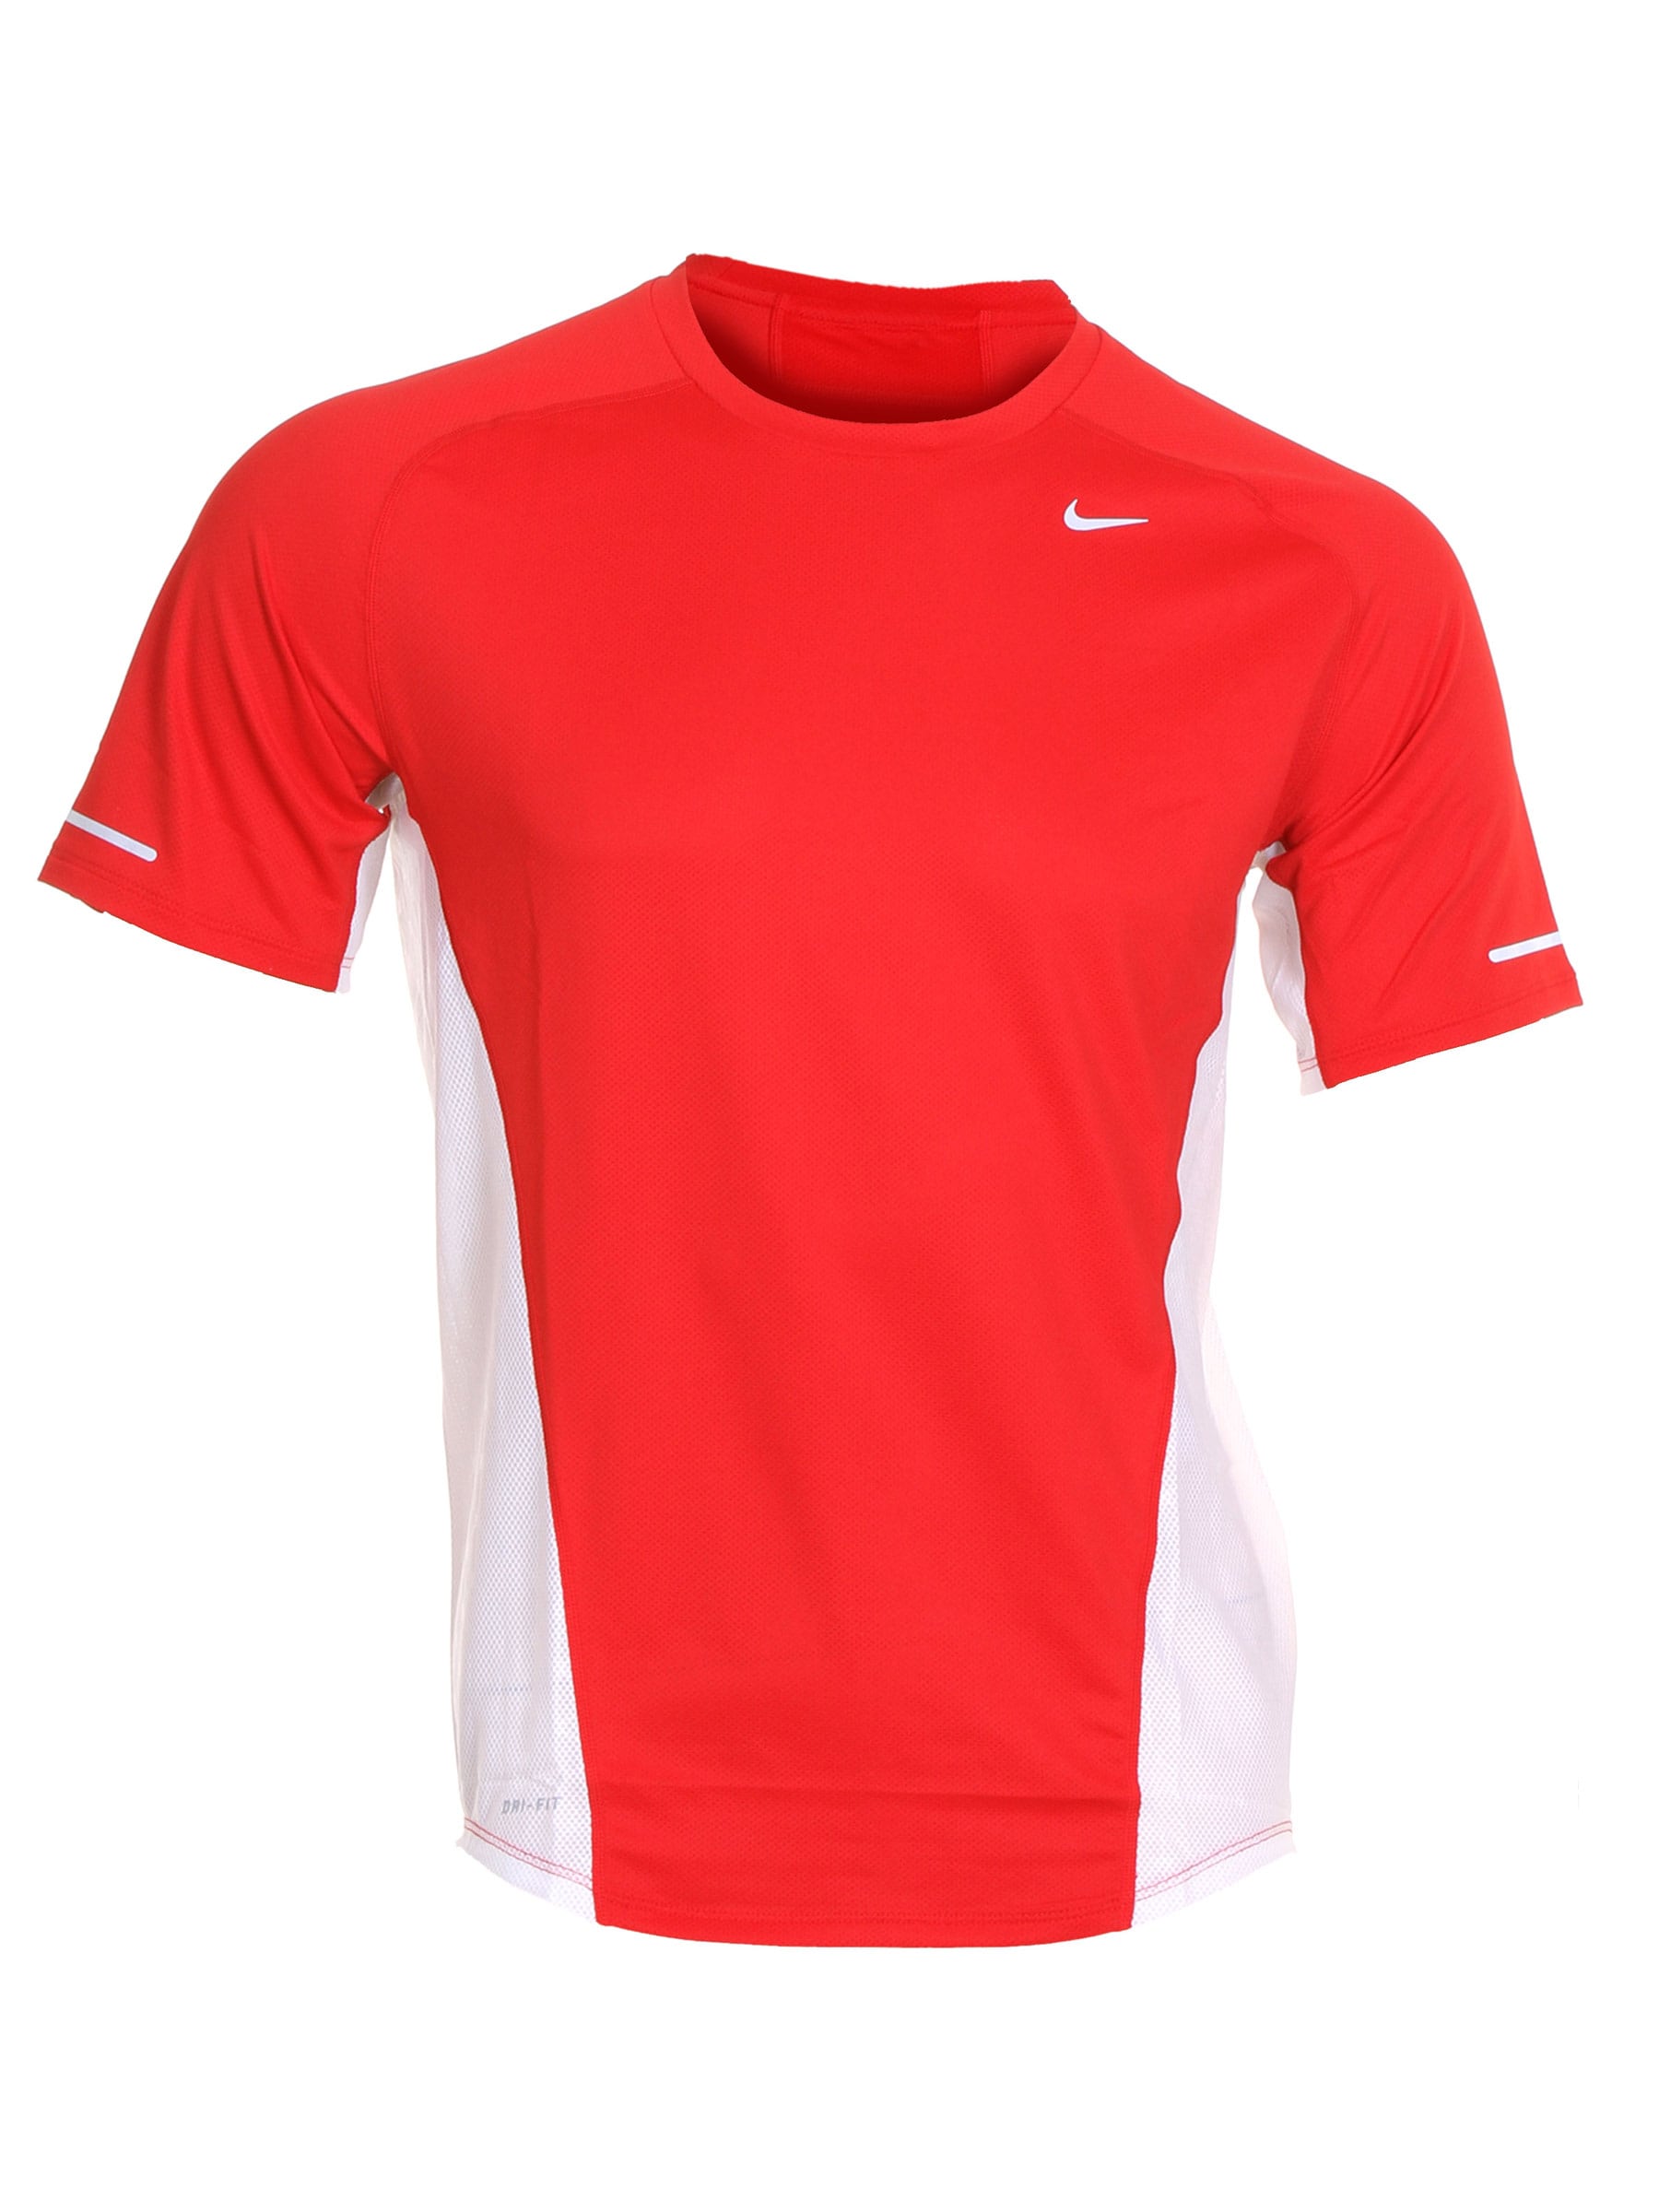 Nike Mens Nike Sphere Red T-shirt